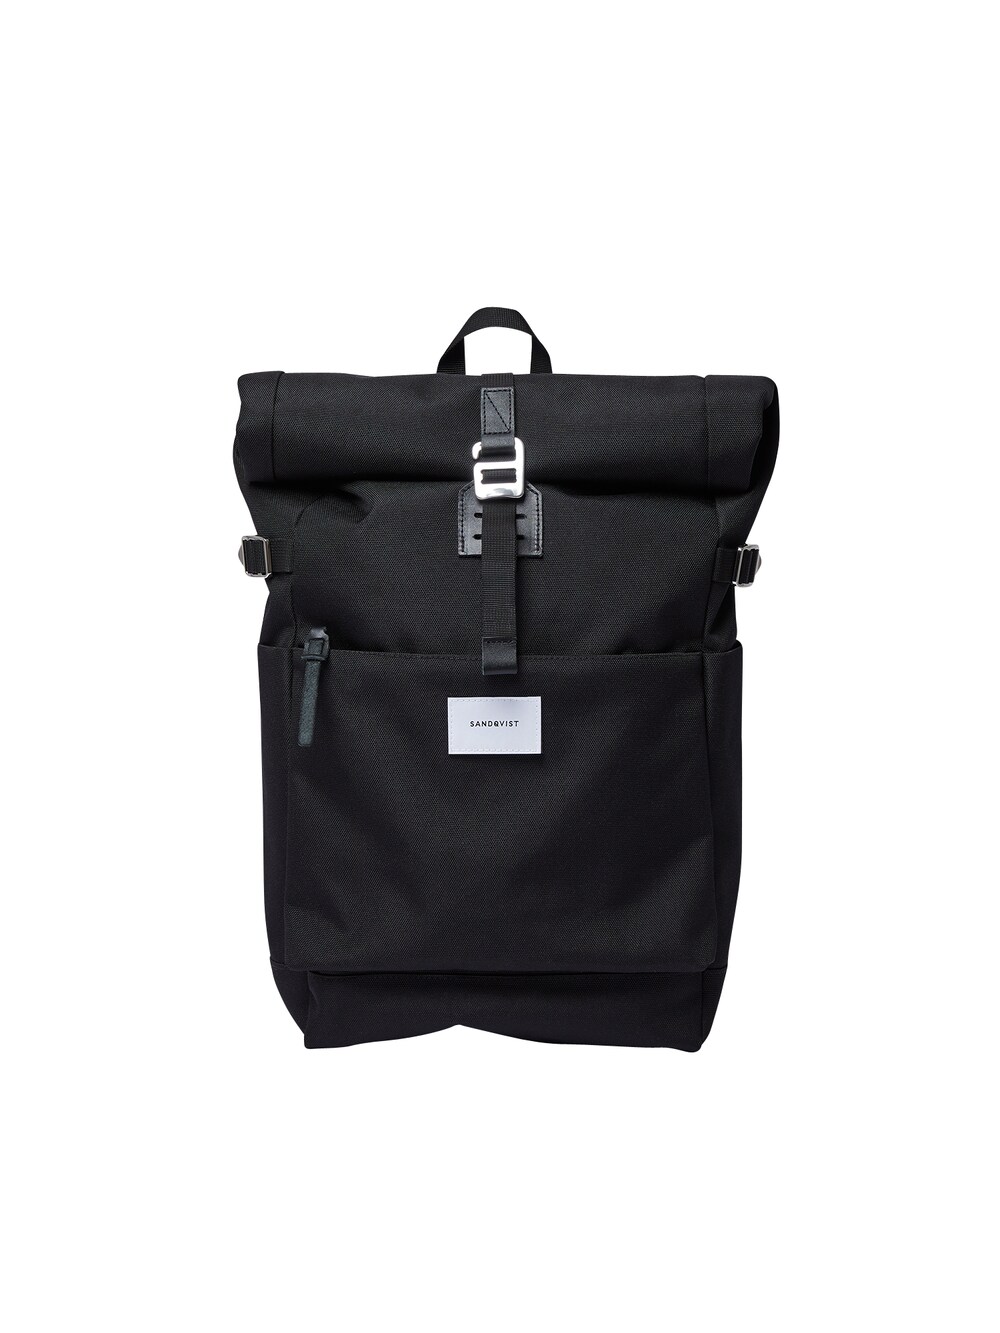 Рюкзак SANDQVIST Ilon, черный рюкзак sandqvist ilon оливковый размер one size